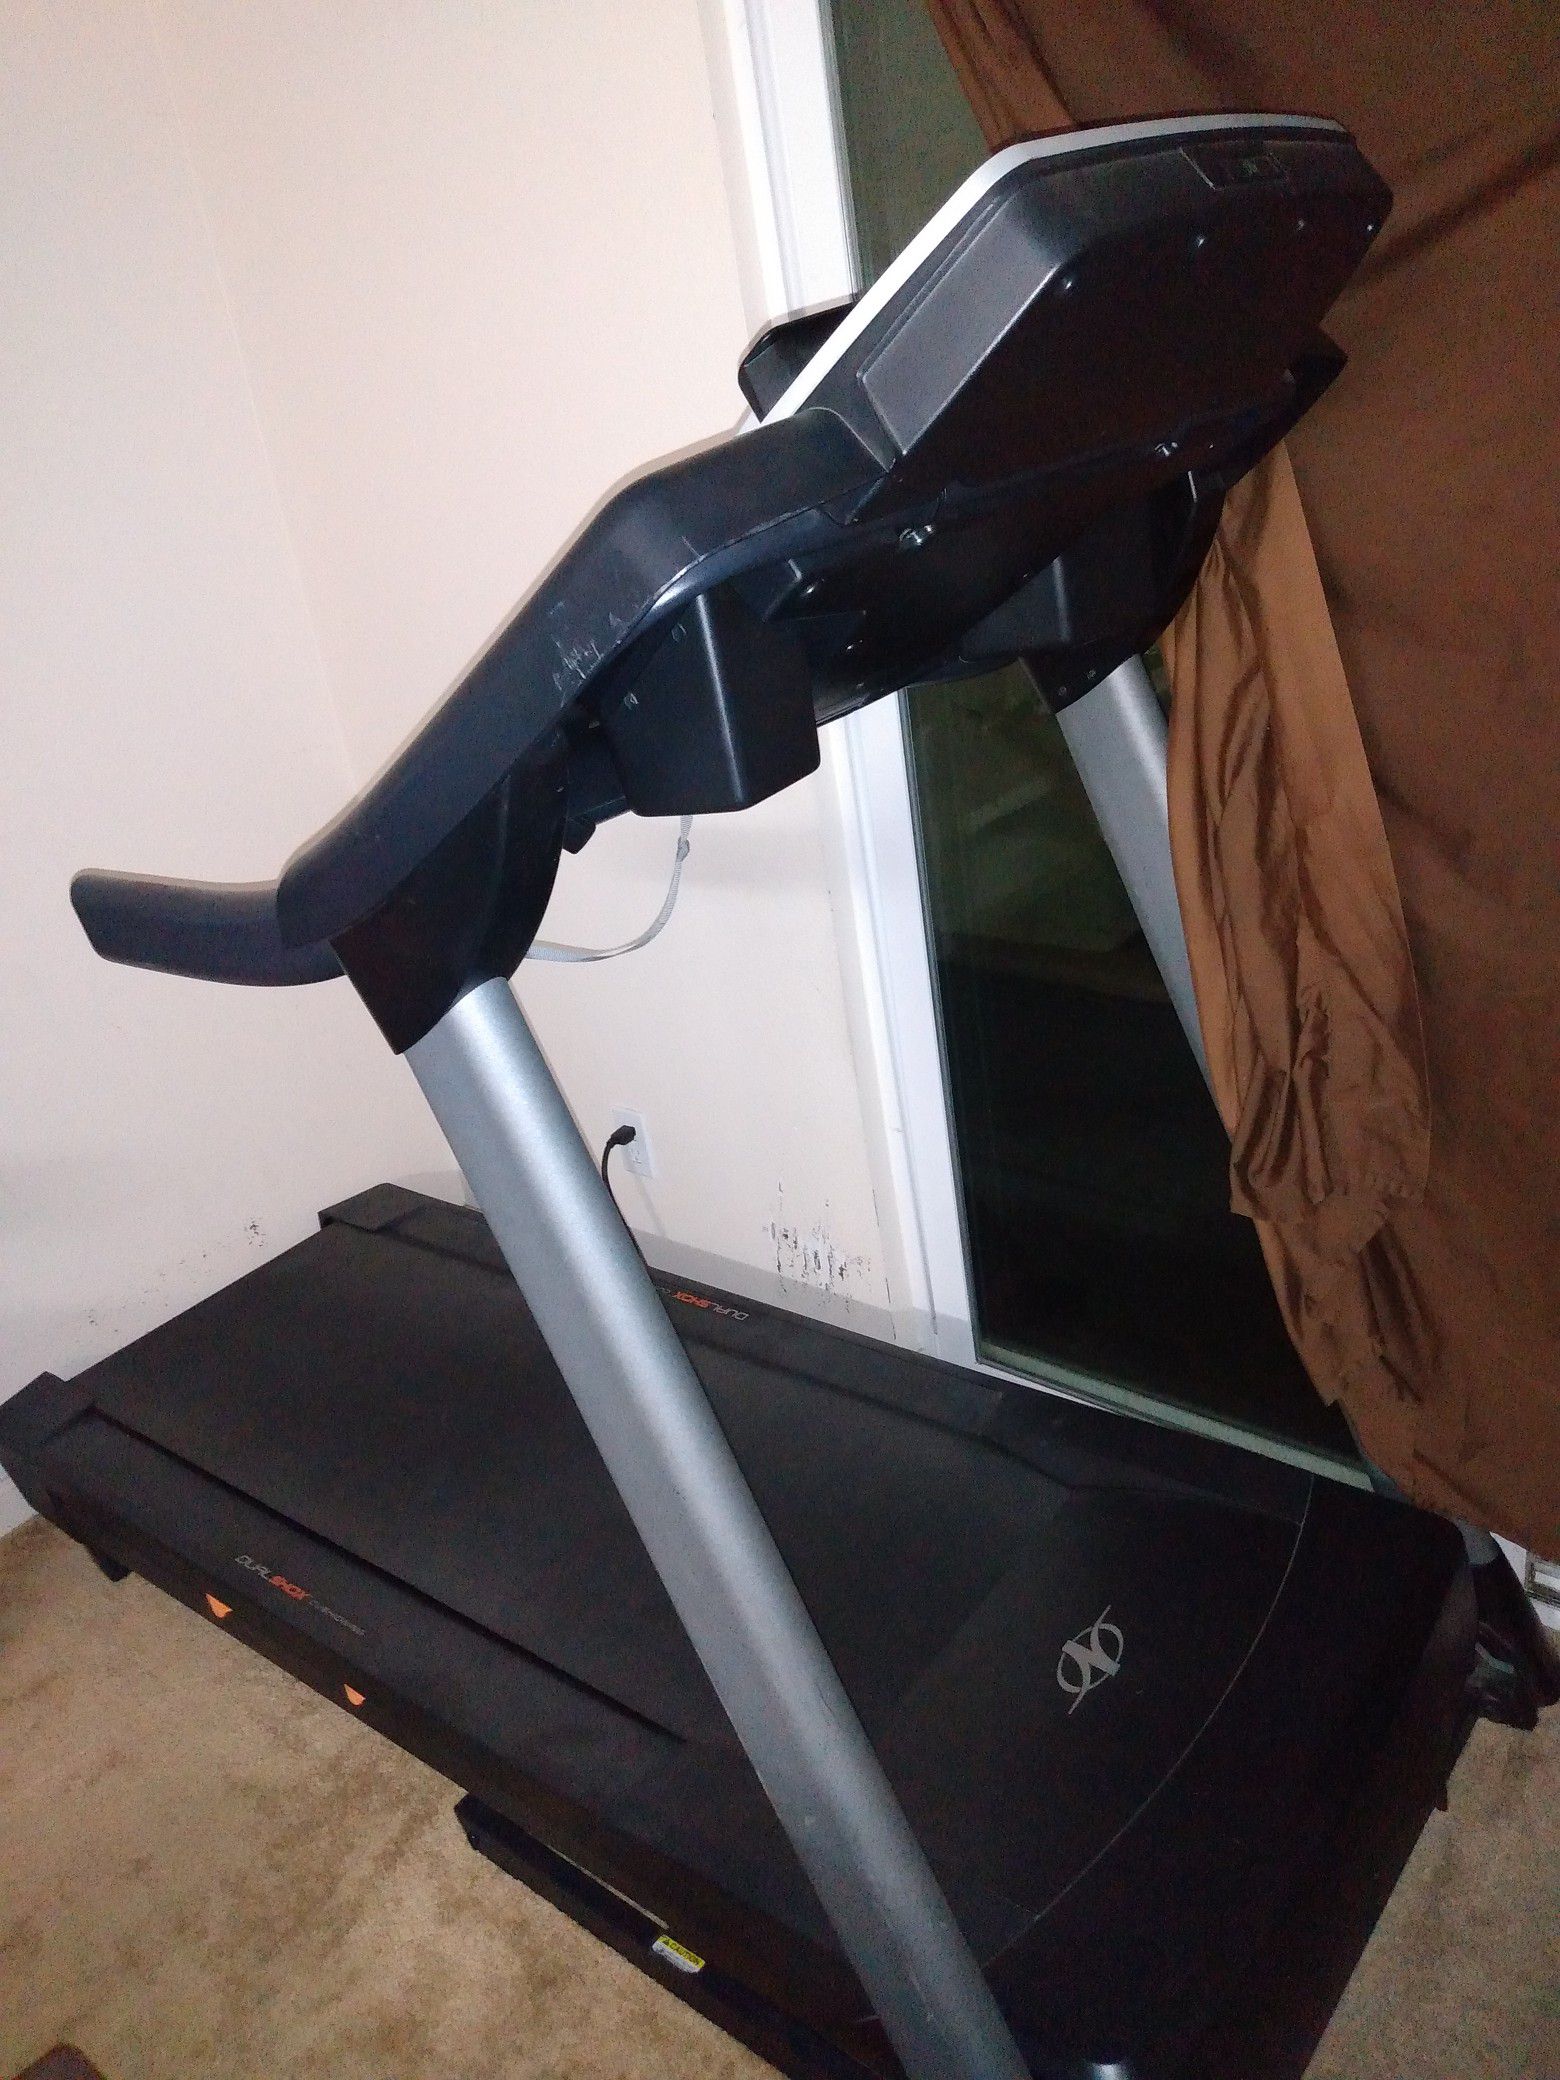 NordicTrack T5.5 treadmill